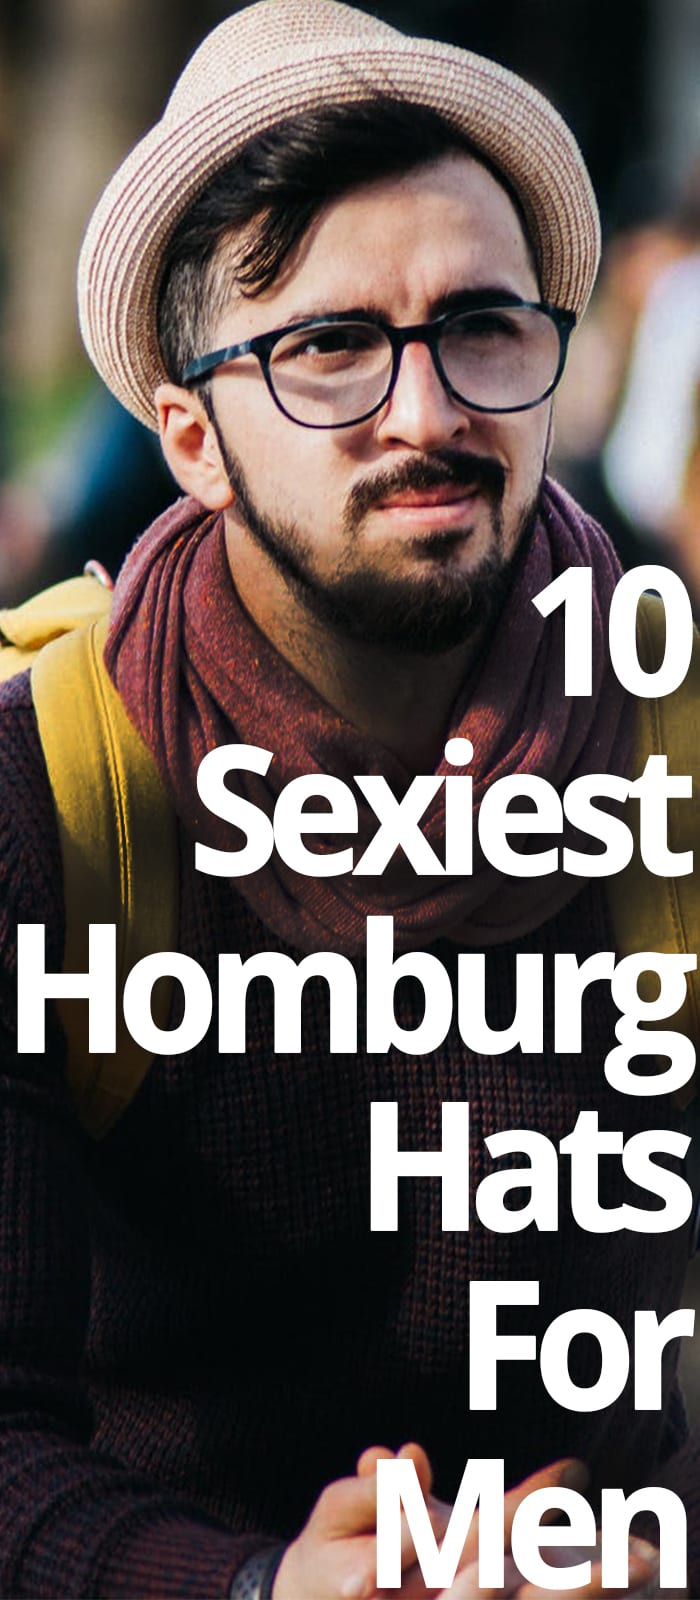 10 SEXIEST HOMBURG HATS